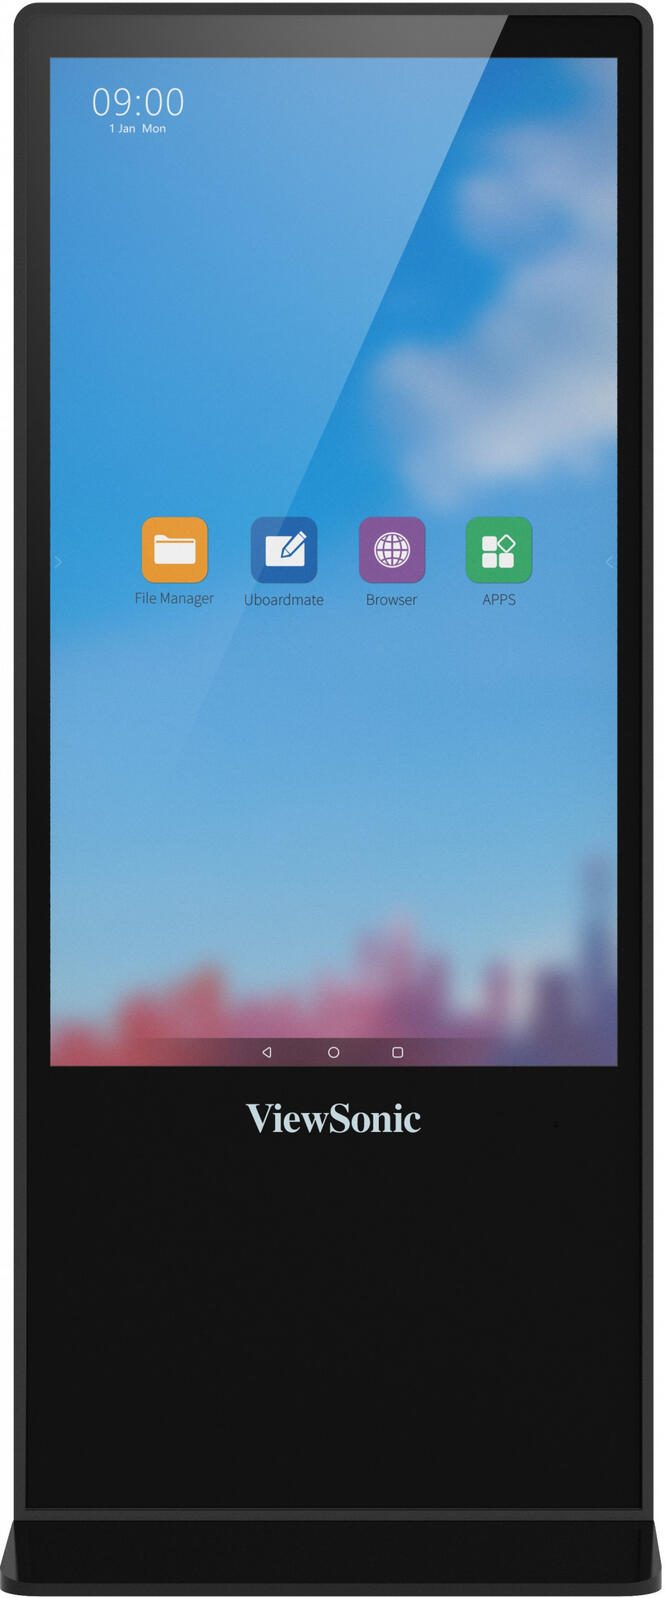 ViewSonic 55 ELED EPoster, 3840x2160,  400 Nits, 1300:1, Android  766907006902 publiskie, komerciālie info ekrāni